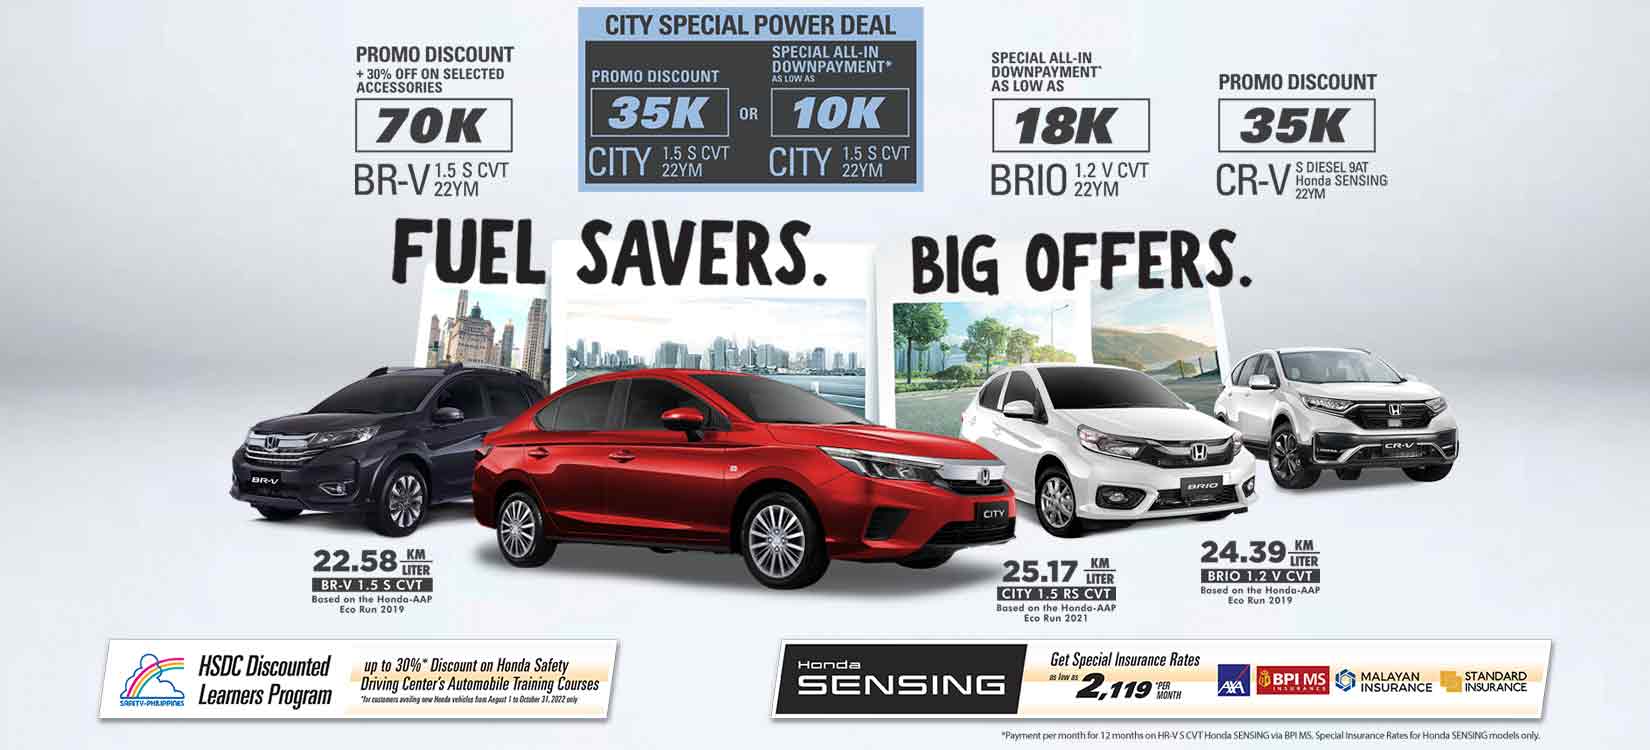 Grab Honda’s “Fuel Savers, Big Offers” this August